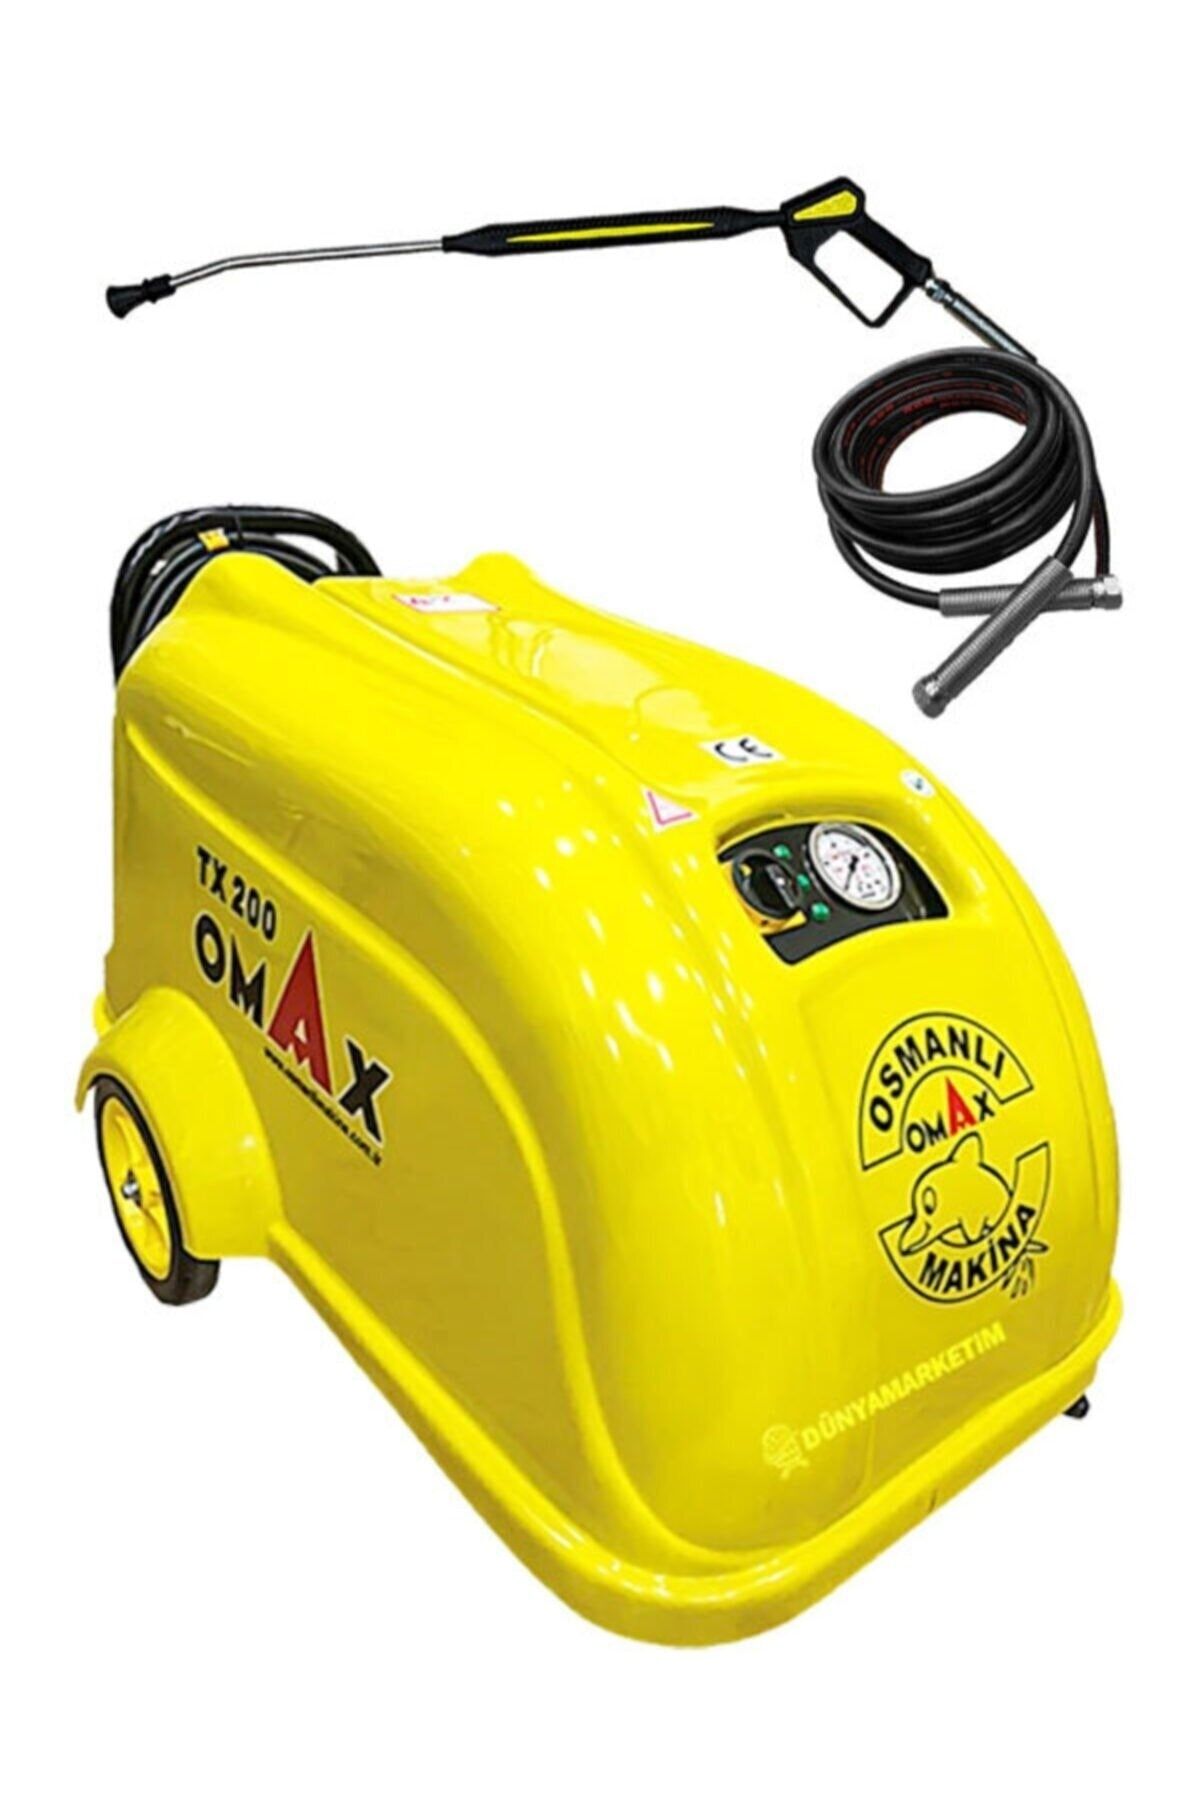 Omax Tx 200 Basınçlı Yıkama Makinası 200 Bar Italyan Pompa 380v Trifaze Pra-2751633-2351